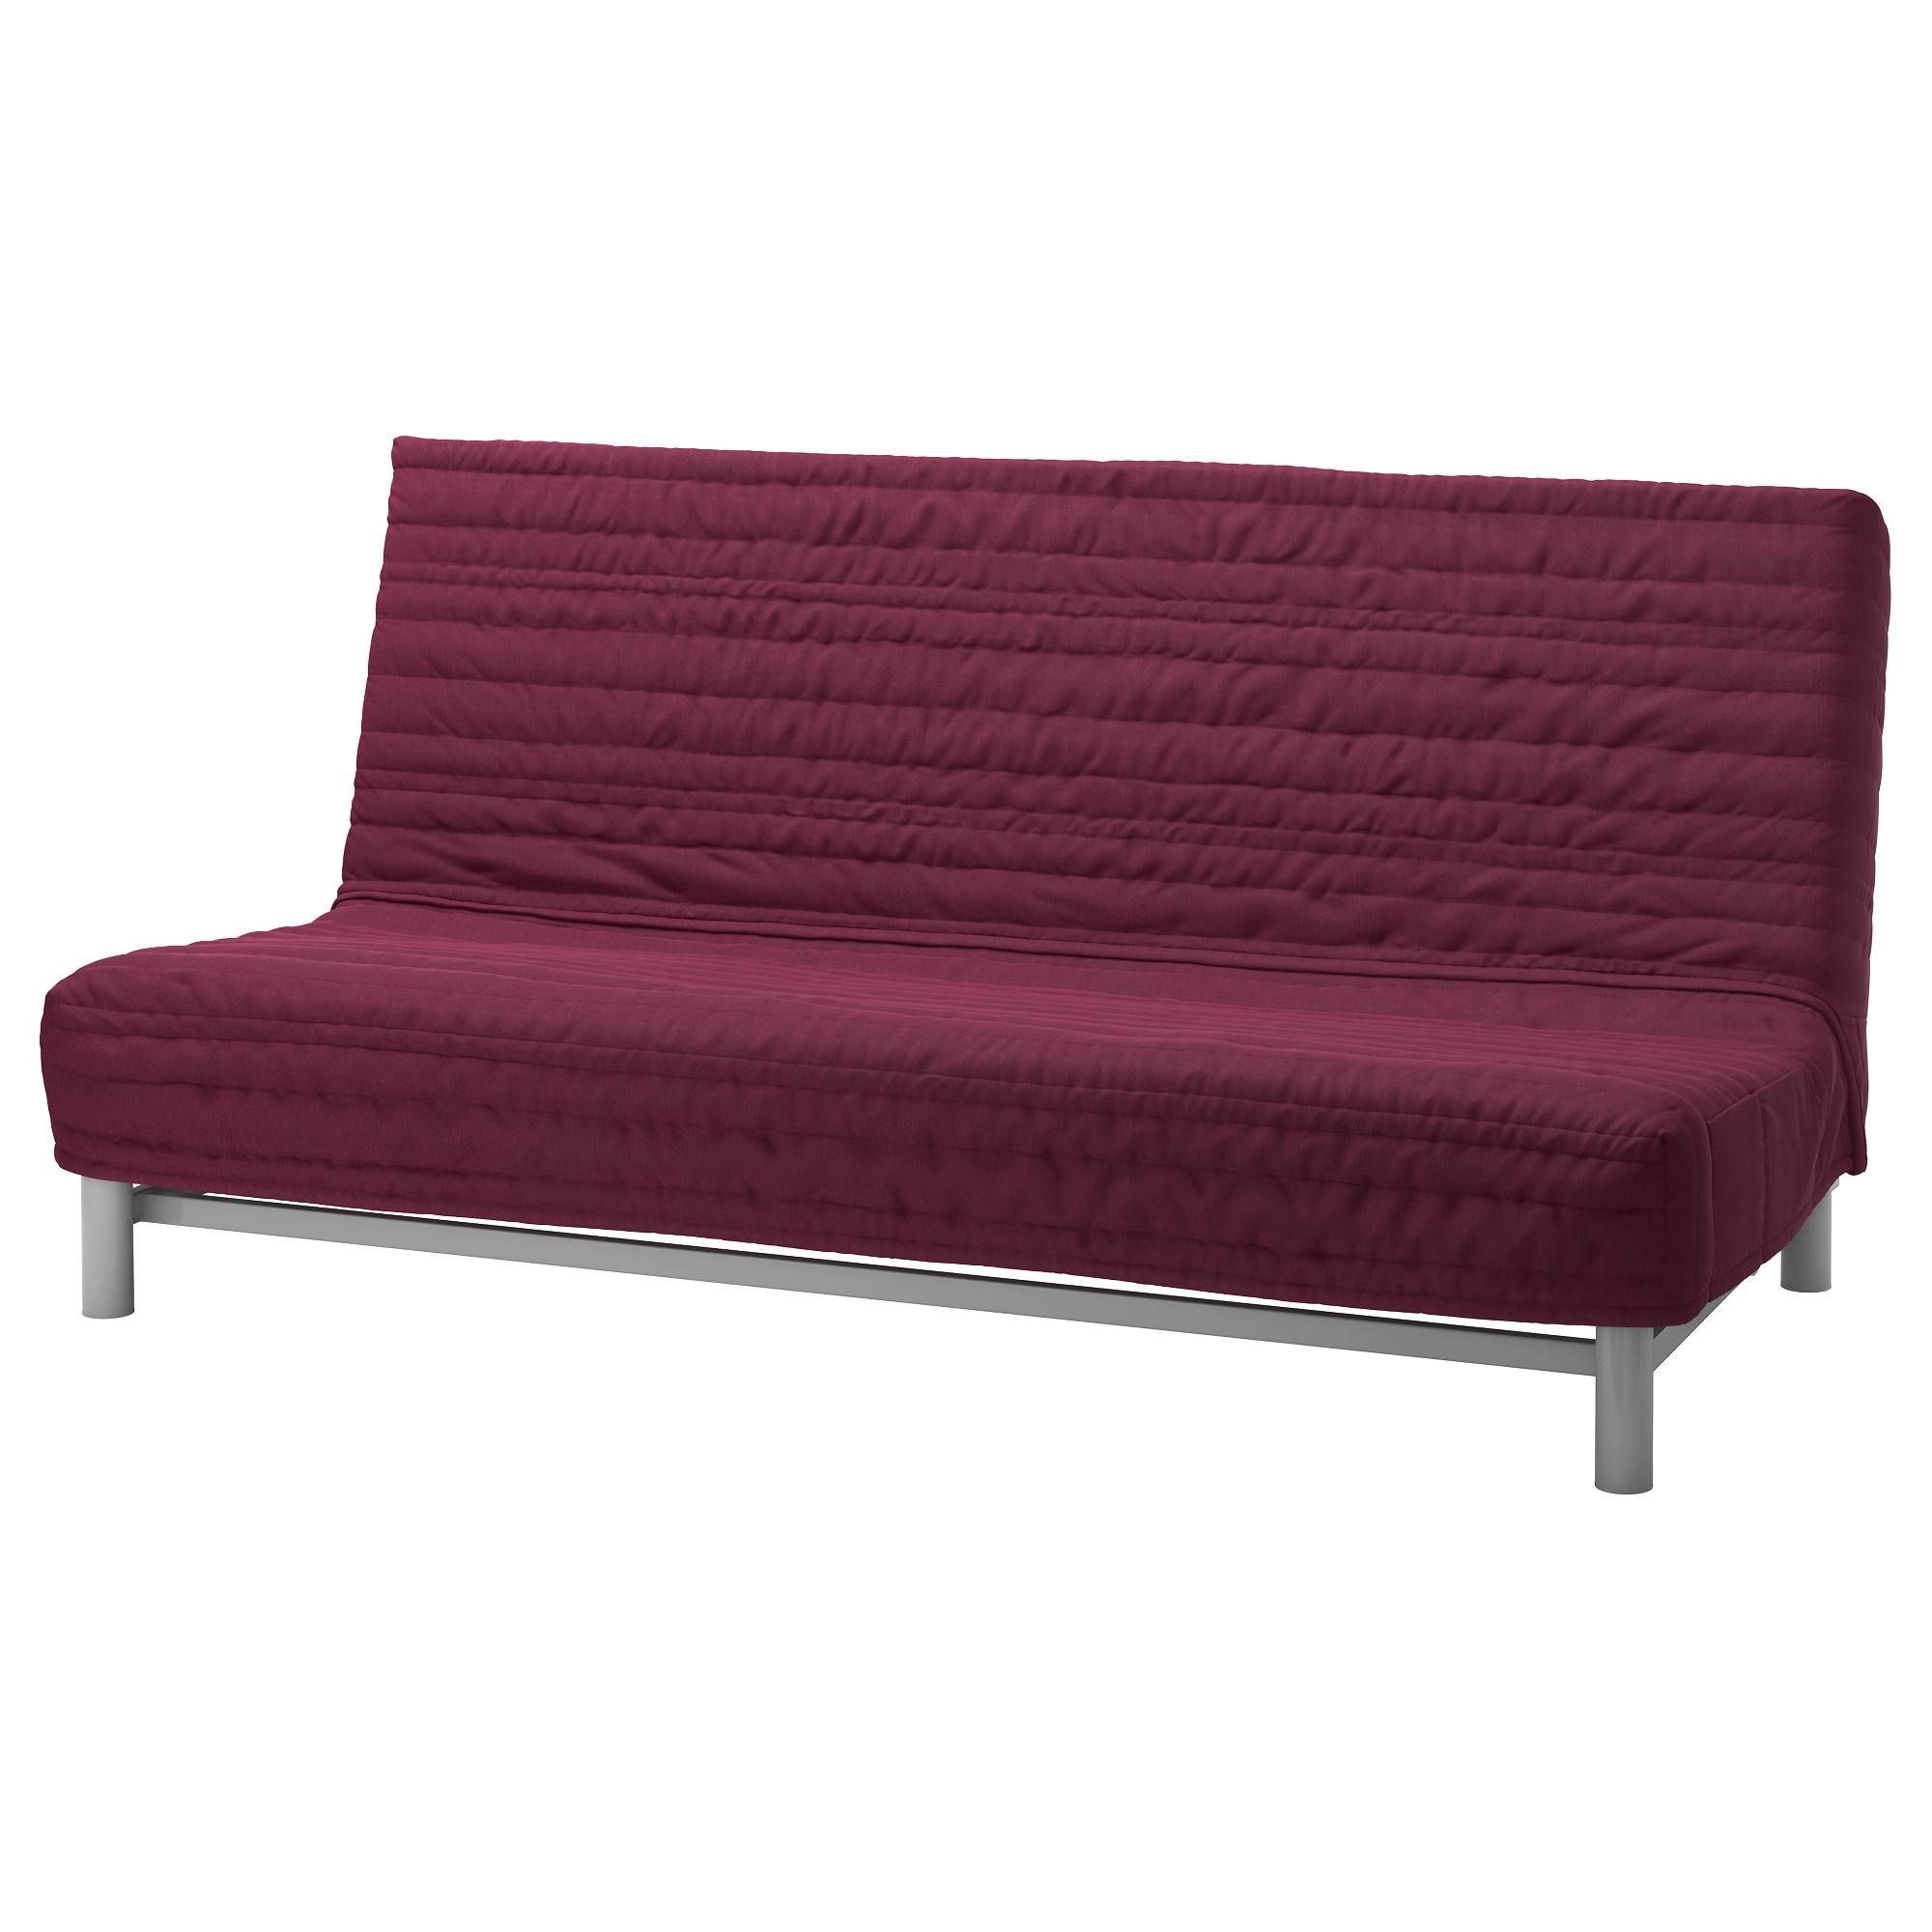 Beddinge Lövås Sleeper Sofa – Knisa Turquoise – Ikea For Fulton Sofa Beds (View 6 of 30)